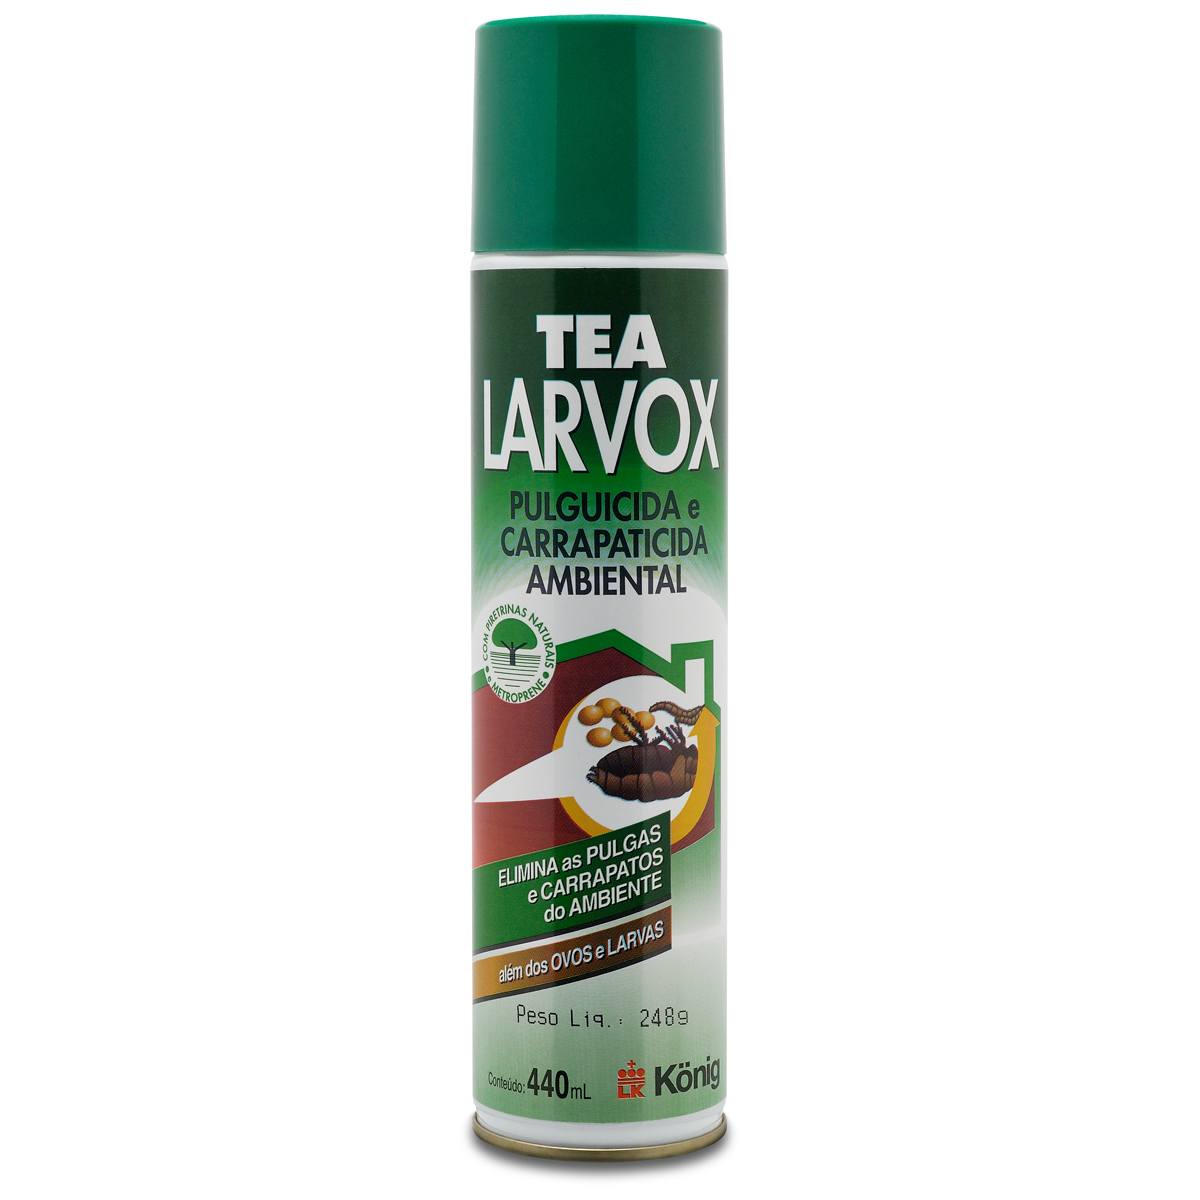 Pulguicida Carrapaticida Aerosol Tea Larvox Konig 440 ml